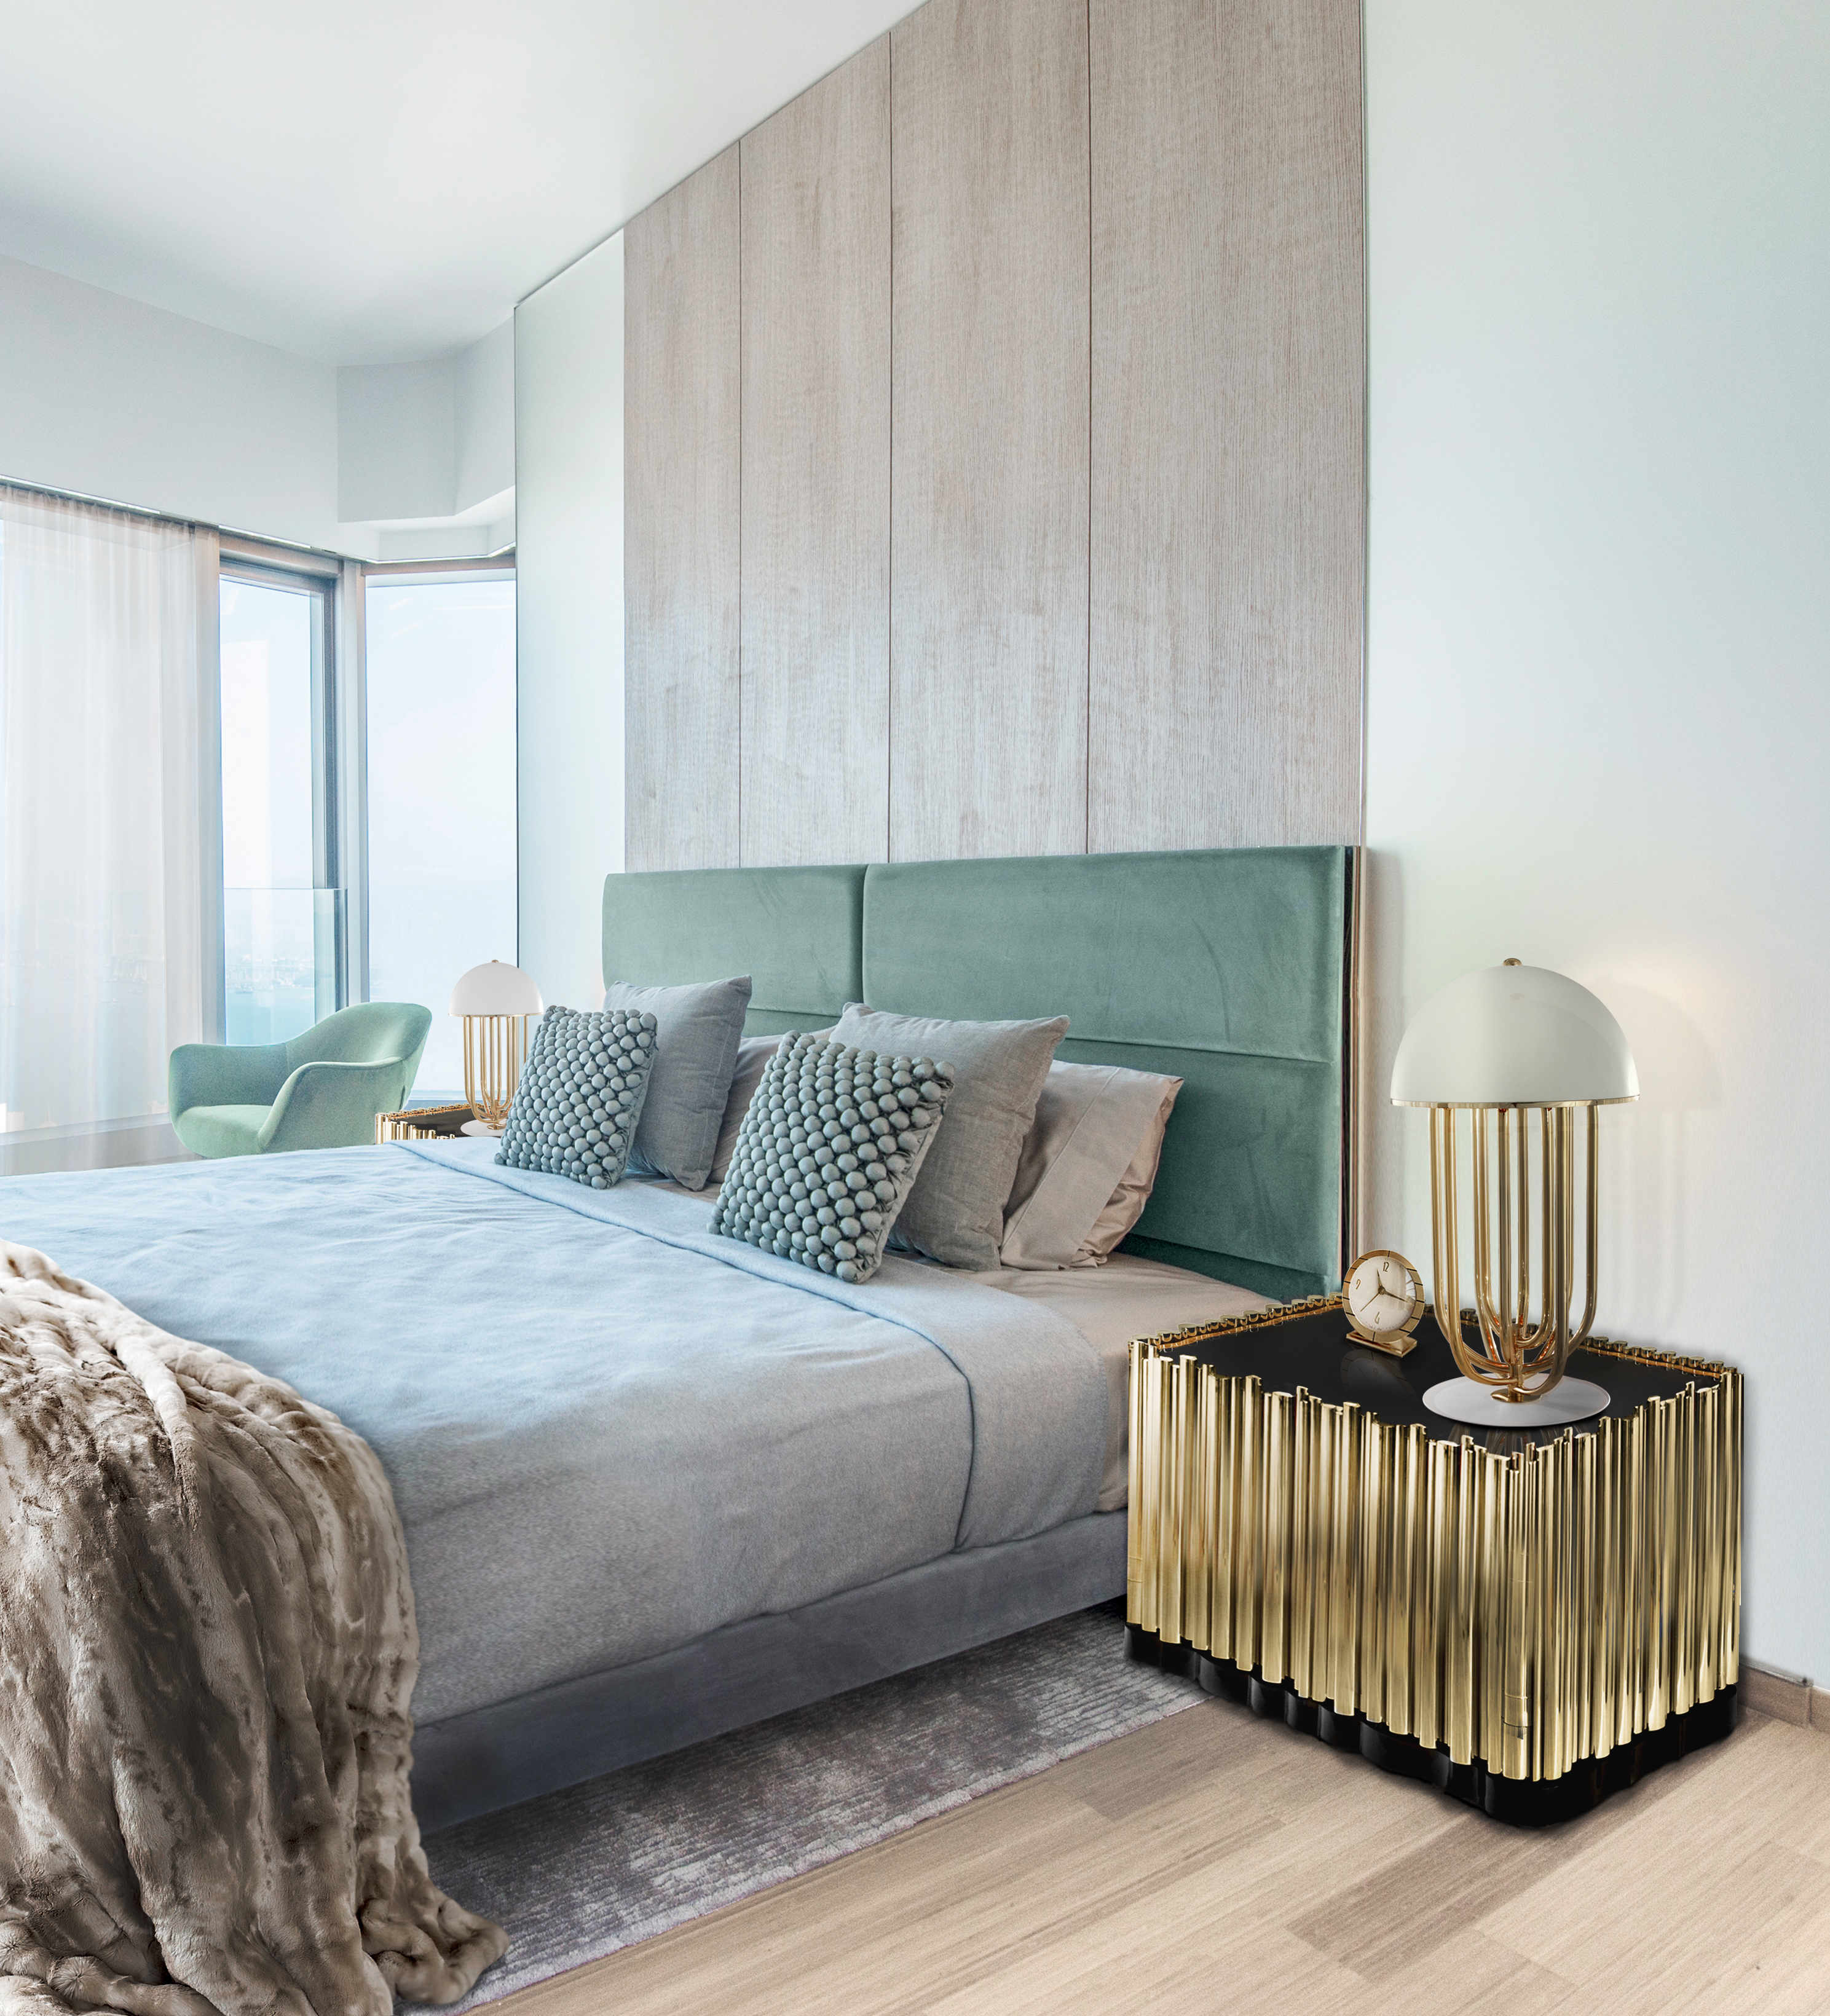 Luxury design bedroom ideas Delightfull